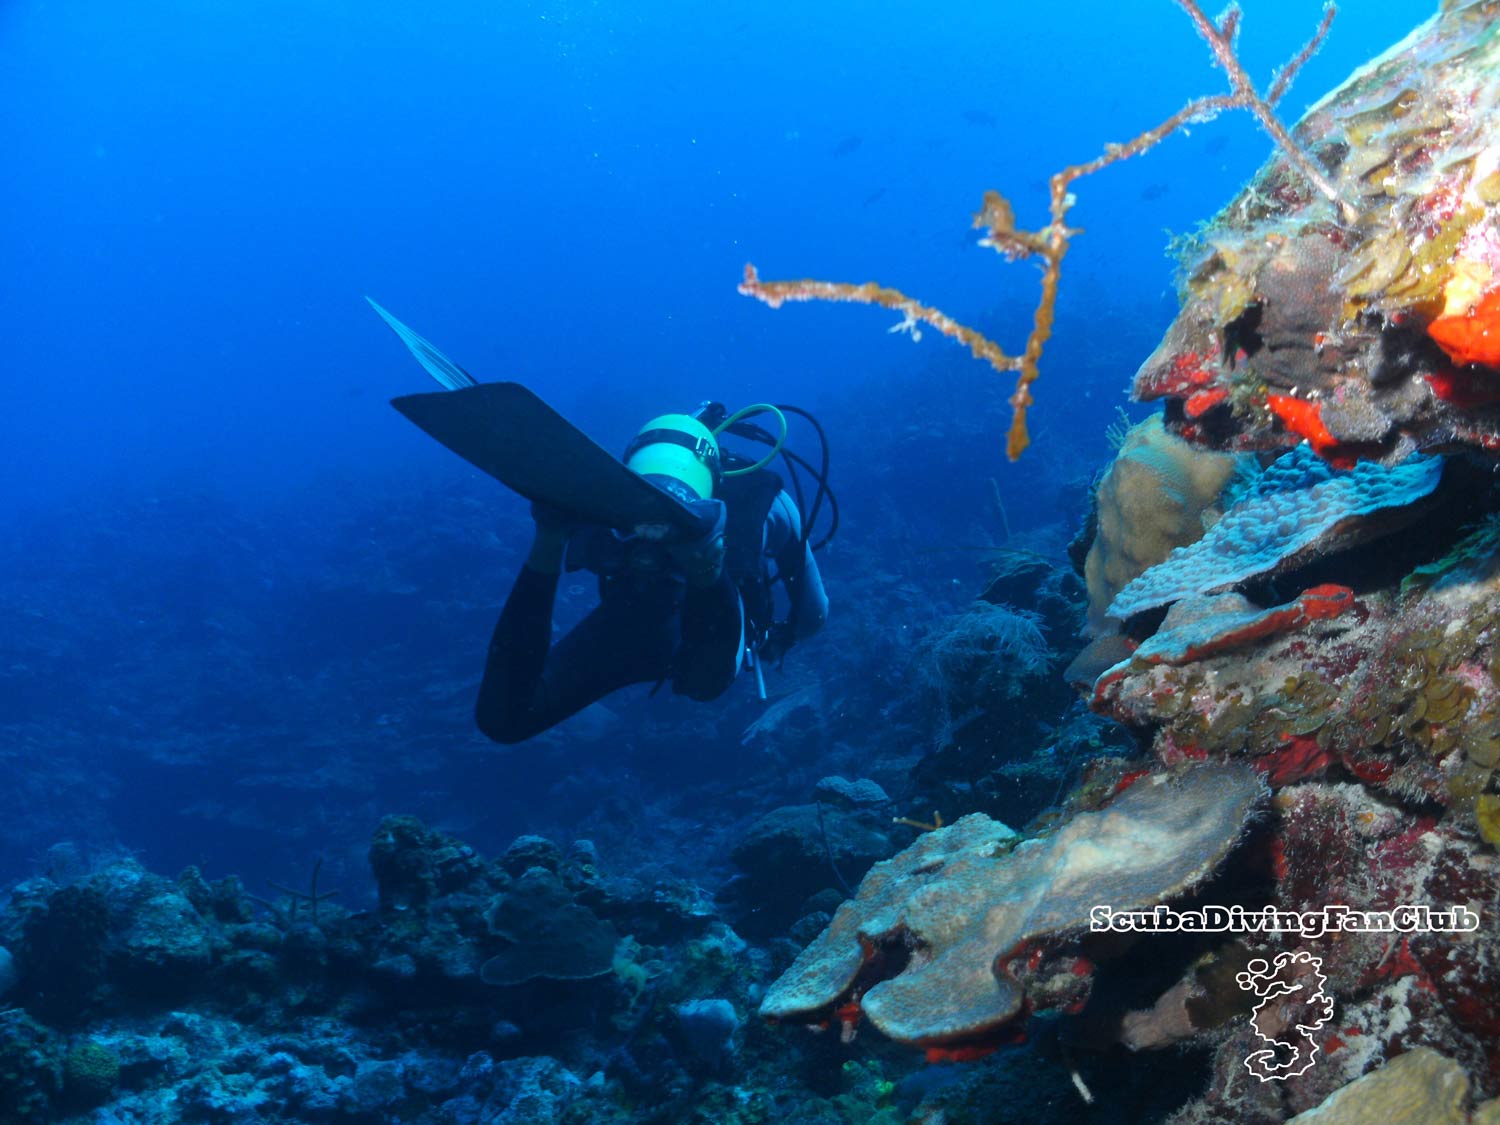 Scuba Diving Image 6 HD Wallpaper. lzamgs